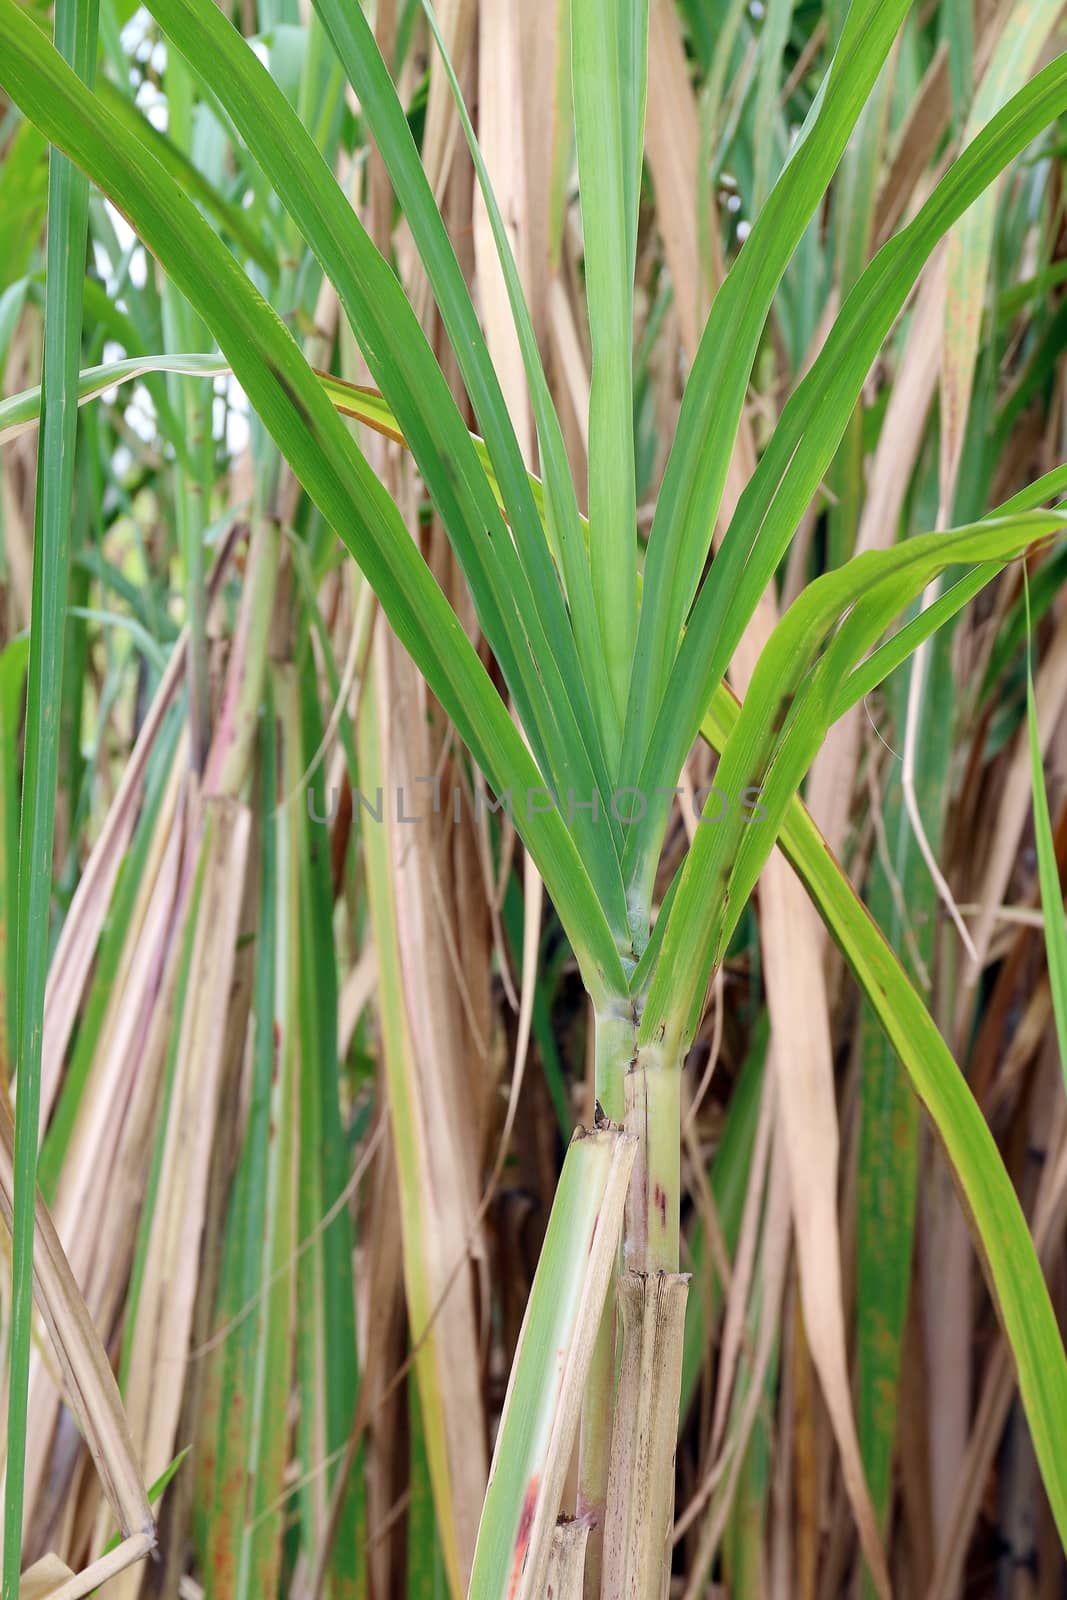 Sugarcane tree plantation, Sugarcane leaves fresh green close-up by cgdeaw